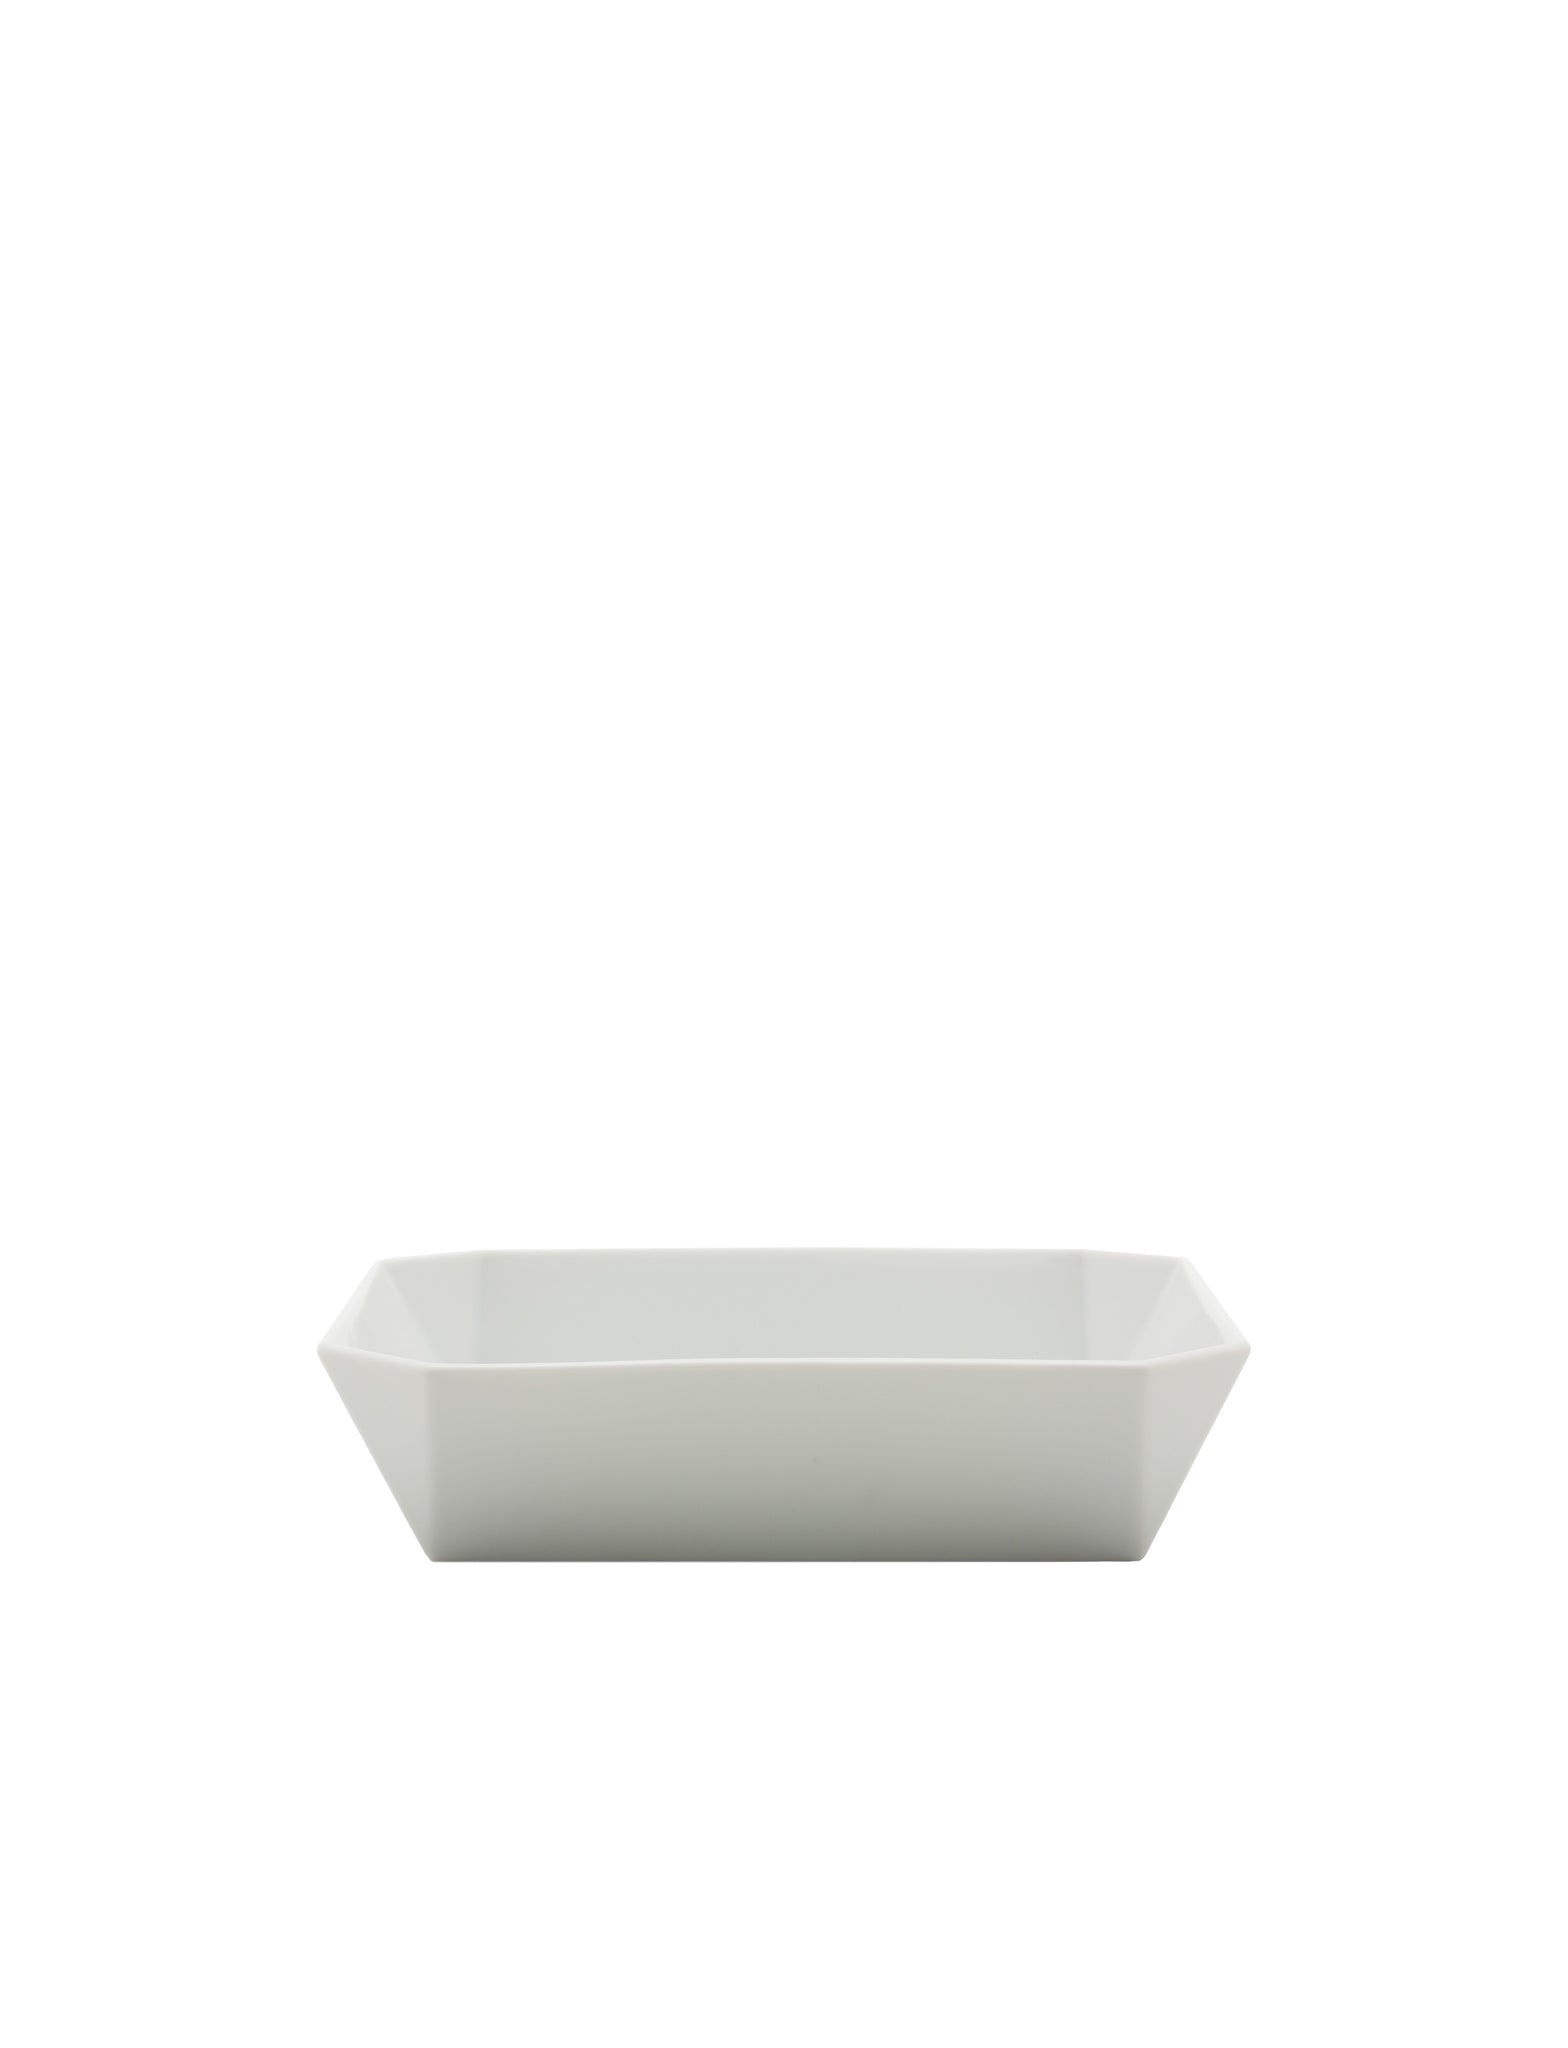 TY Square Bowl 184 glazed white